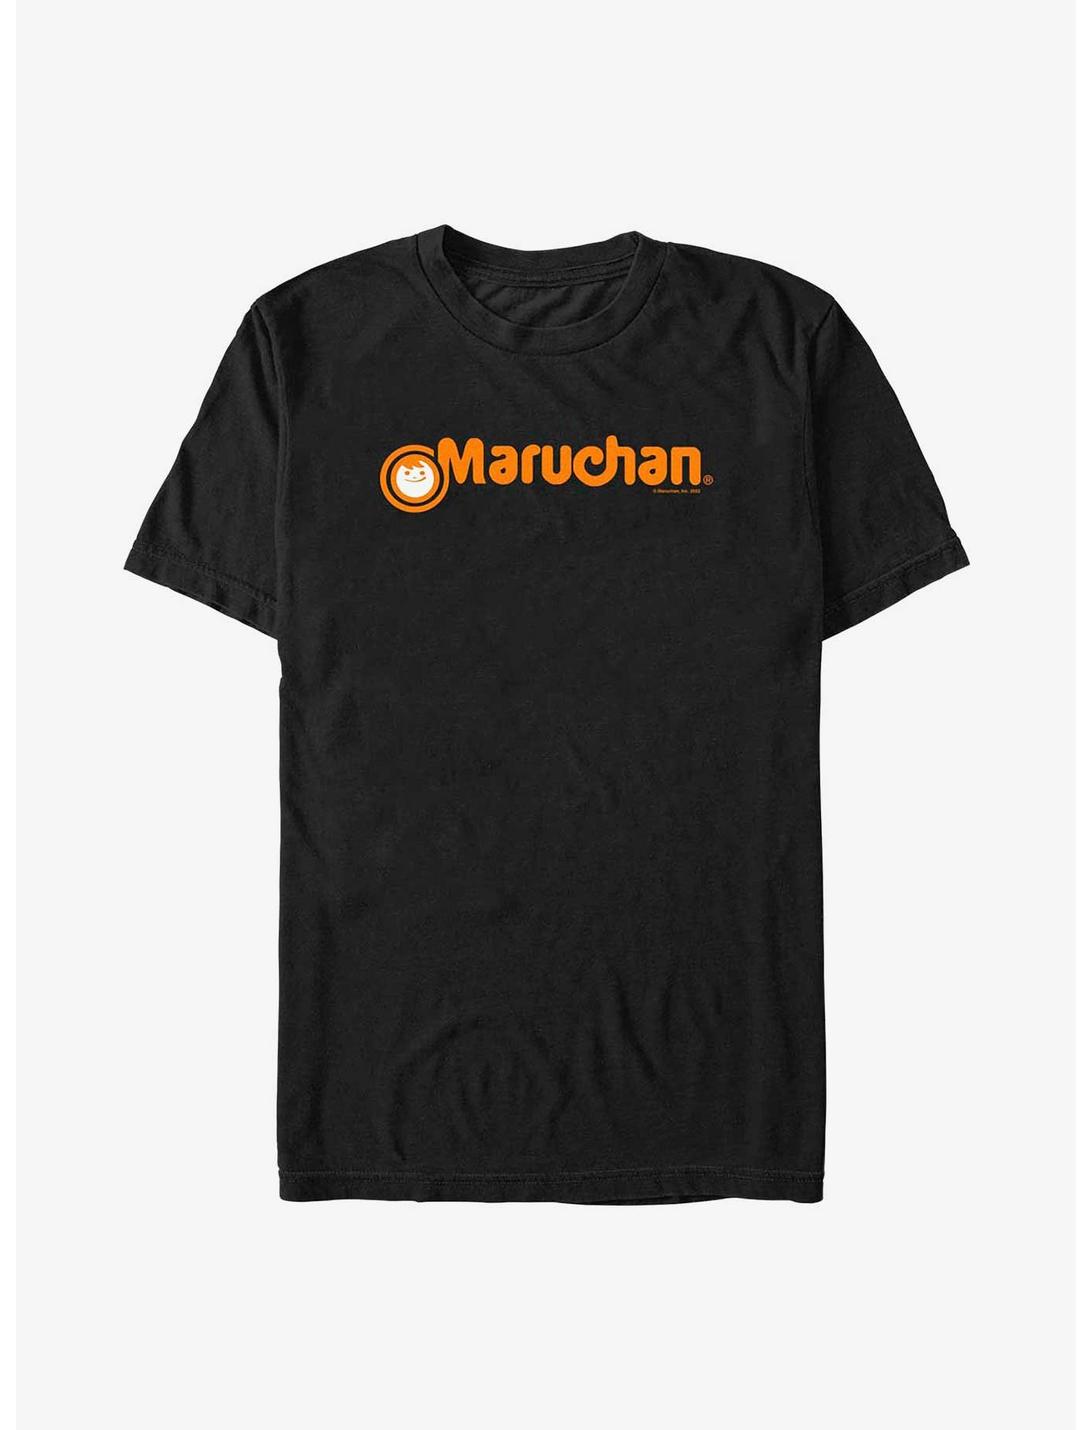 Maruchan Noodle T-Shirt, BLACK, hi-res